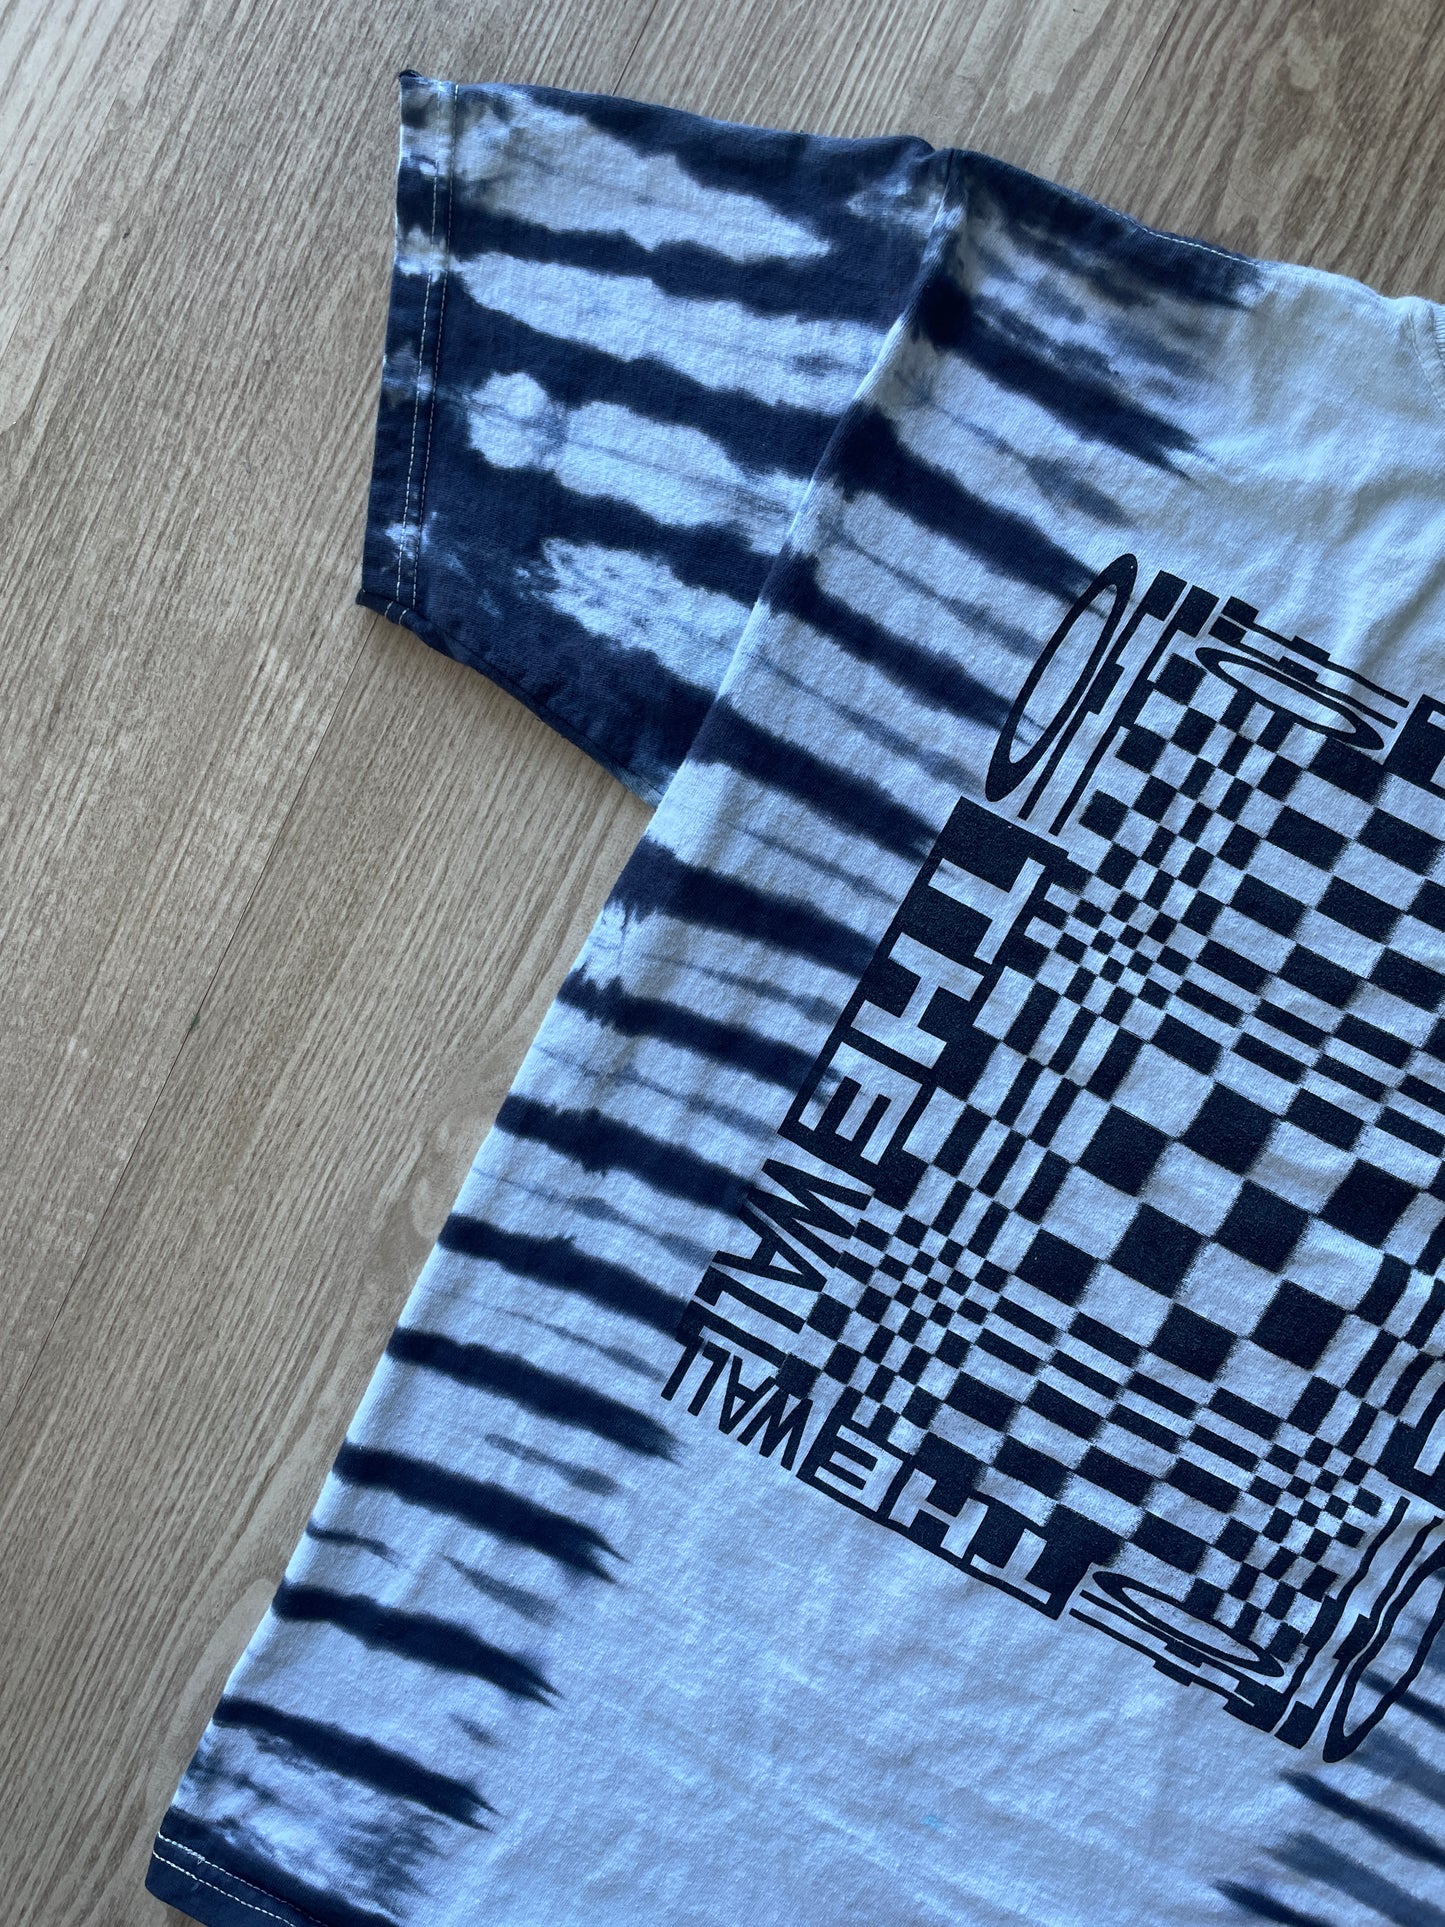 MEDIUM Men’s Vans Checkerboard Handmade Tie Dye T-Shirt | One-Of-a-Kind Black and White Short Sleeve